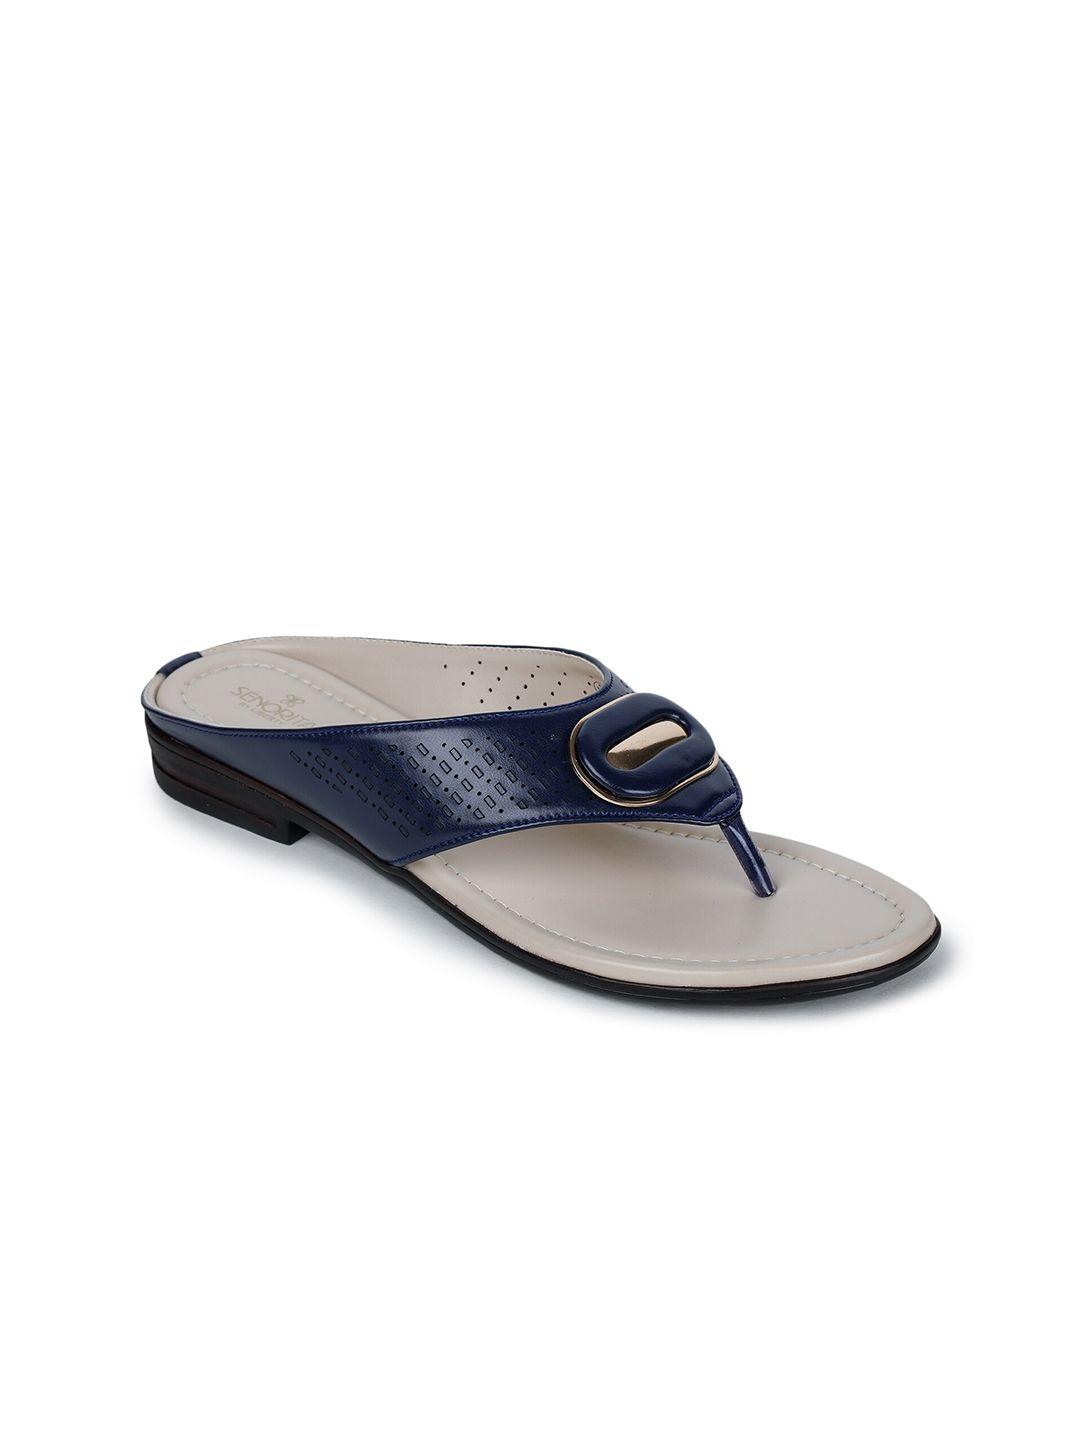 liberty-blue-wedge-sandals